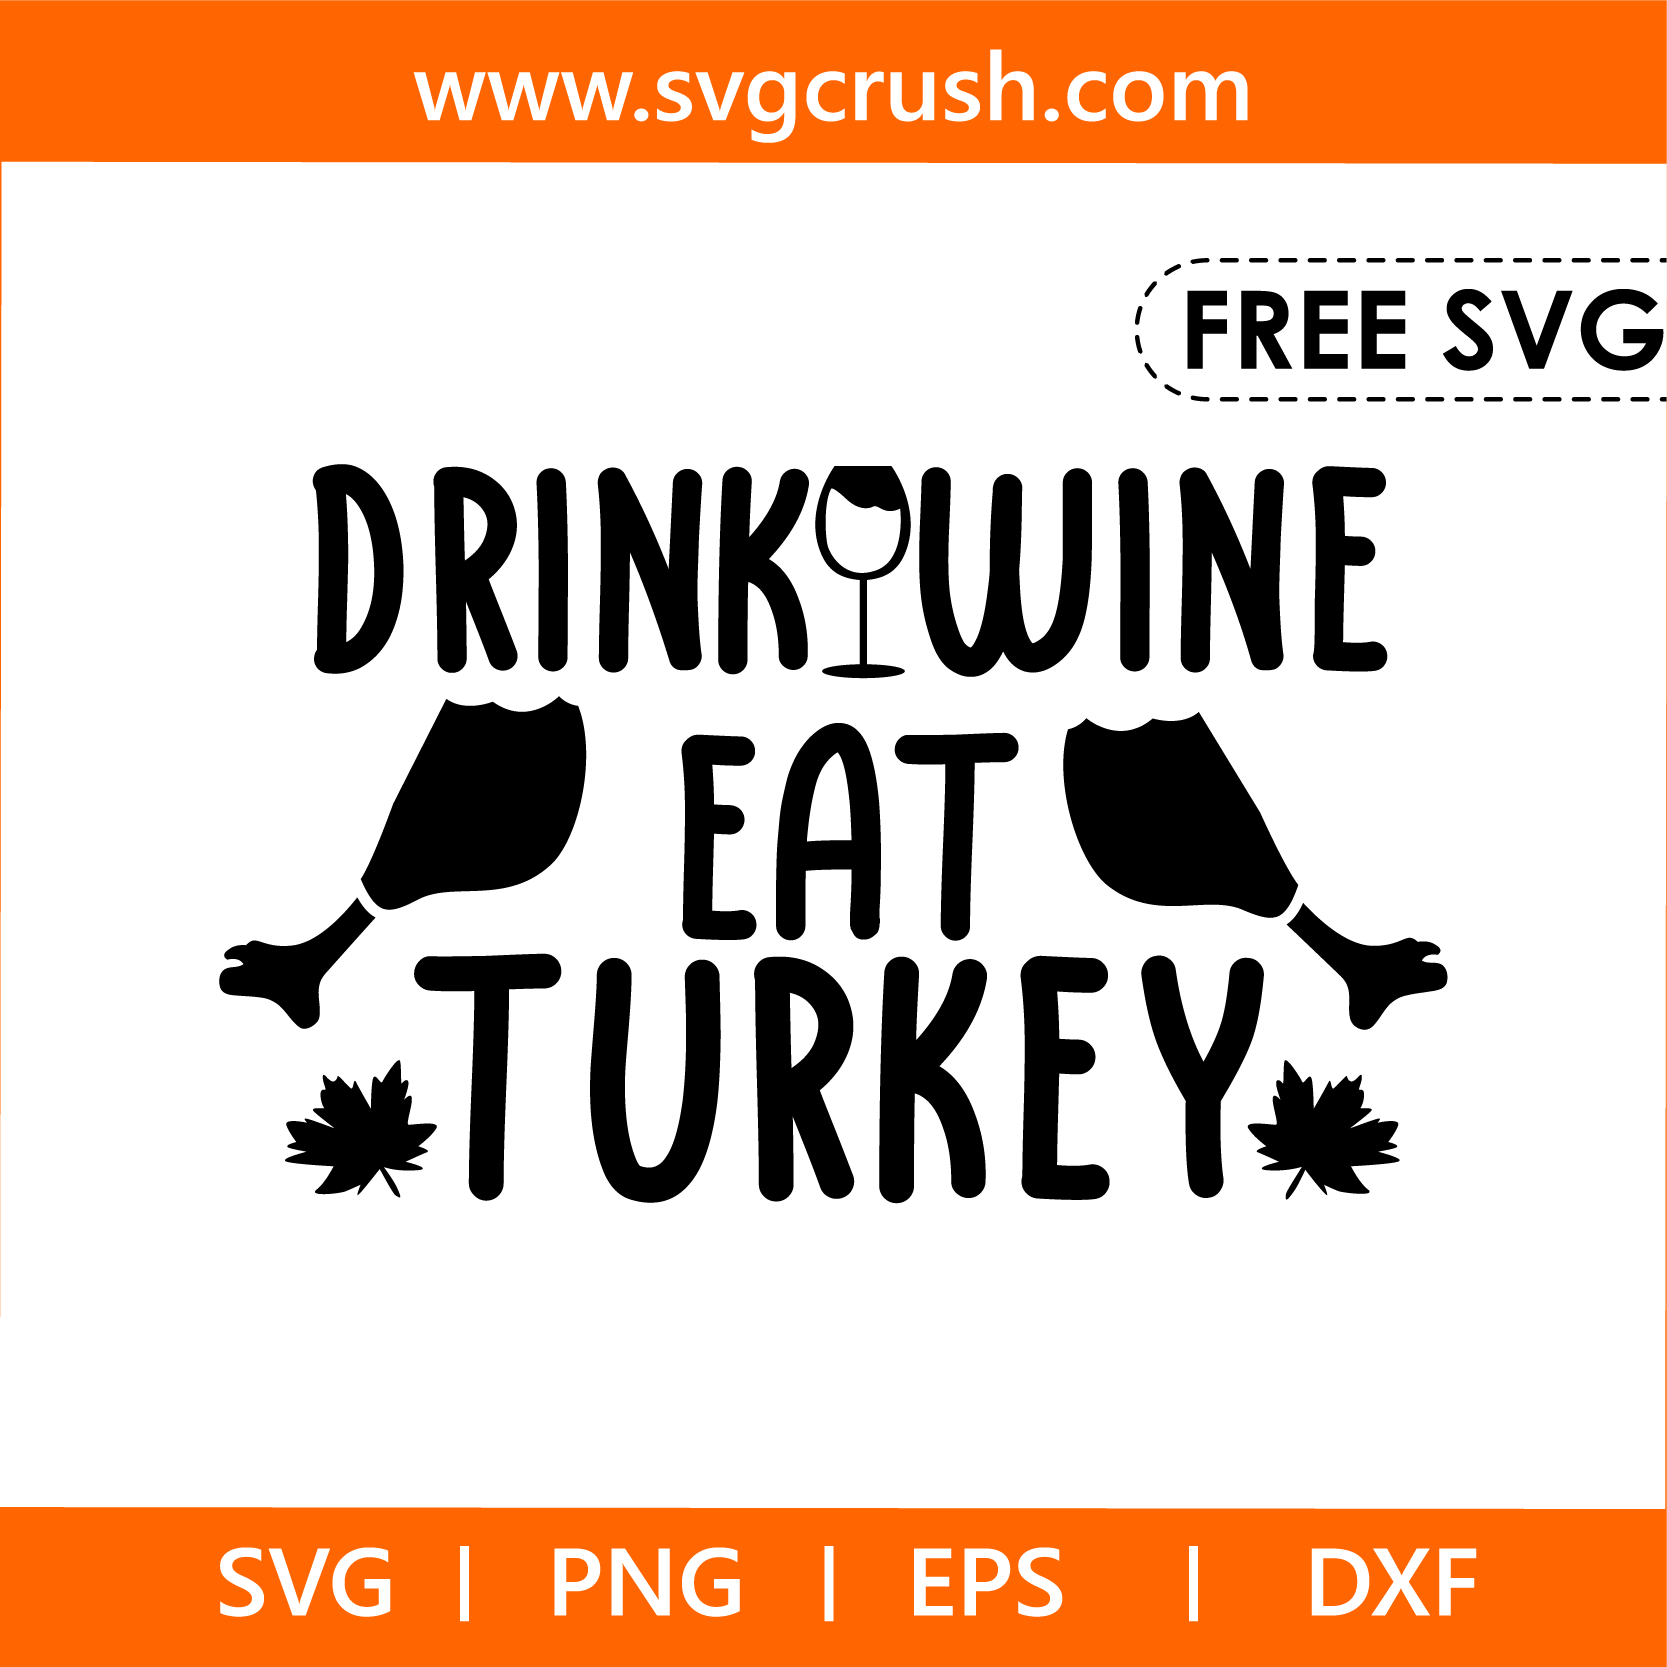 free drink-wine-eat-turkey-003 svg